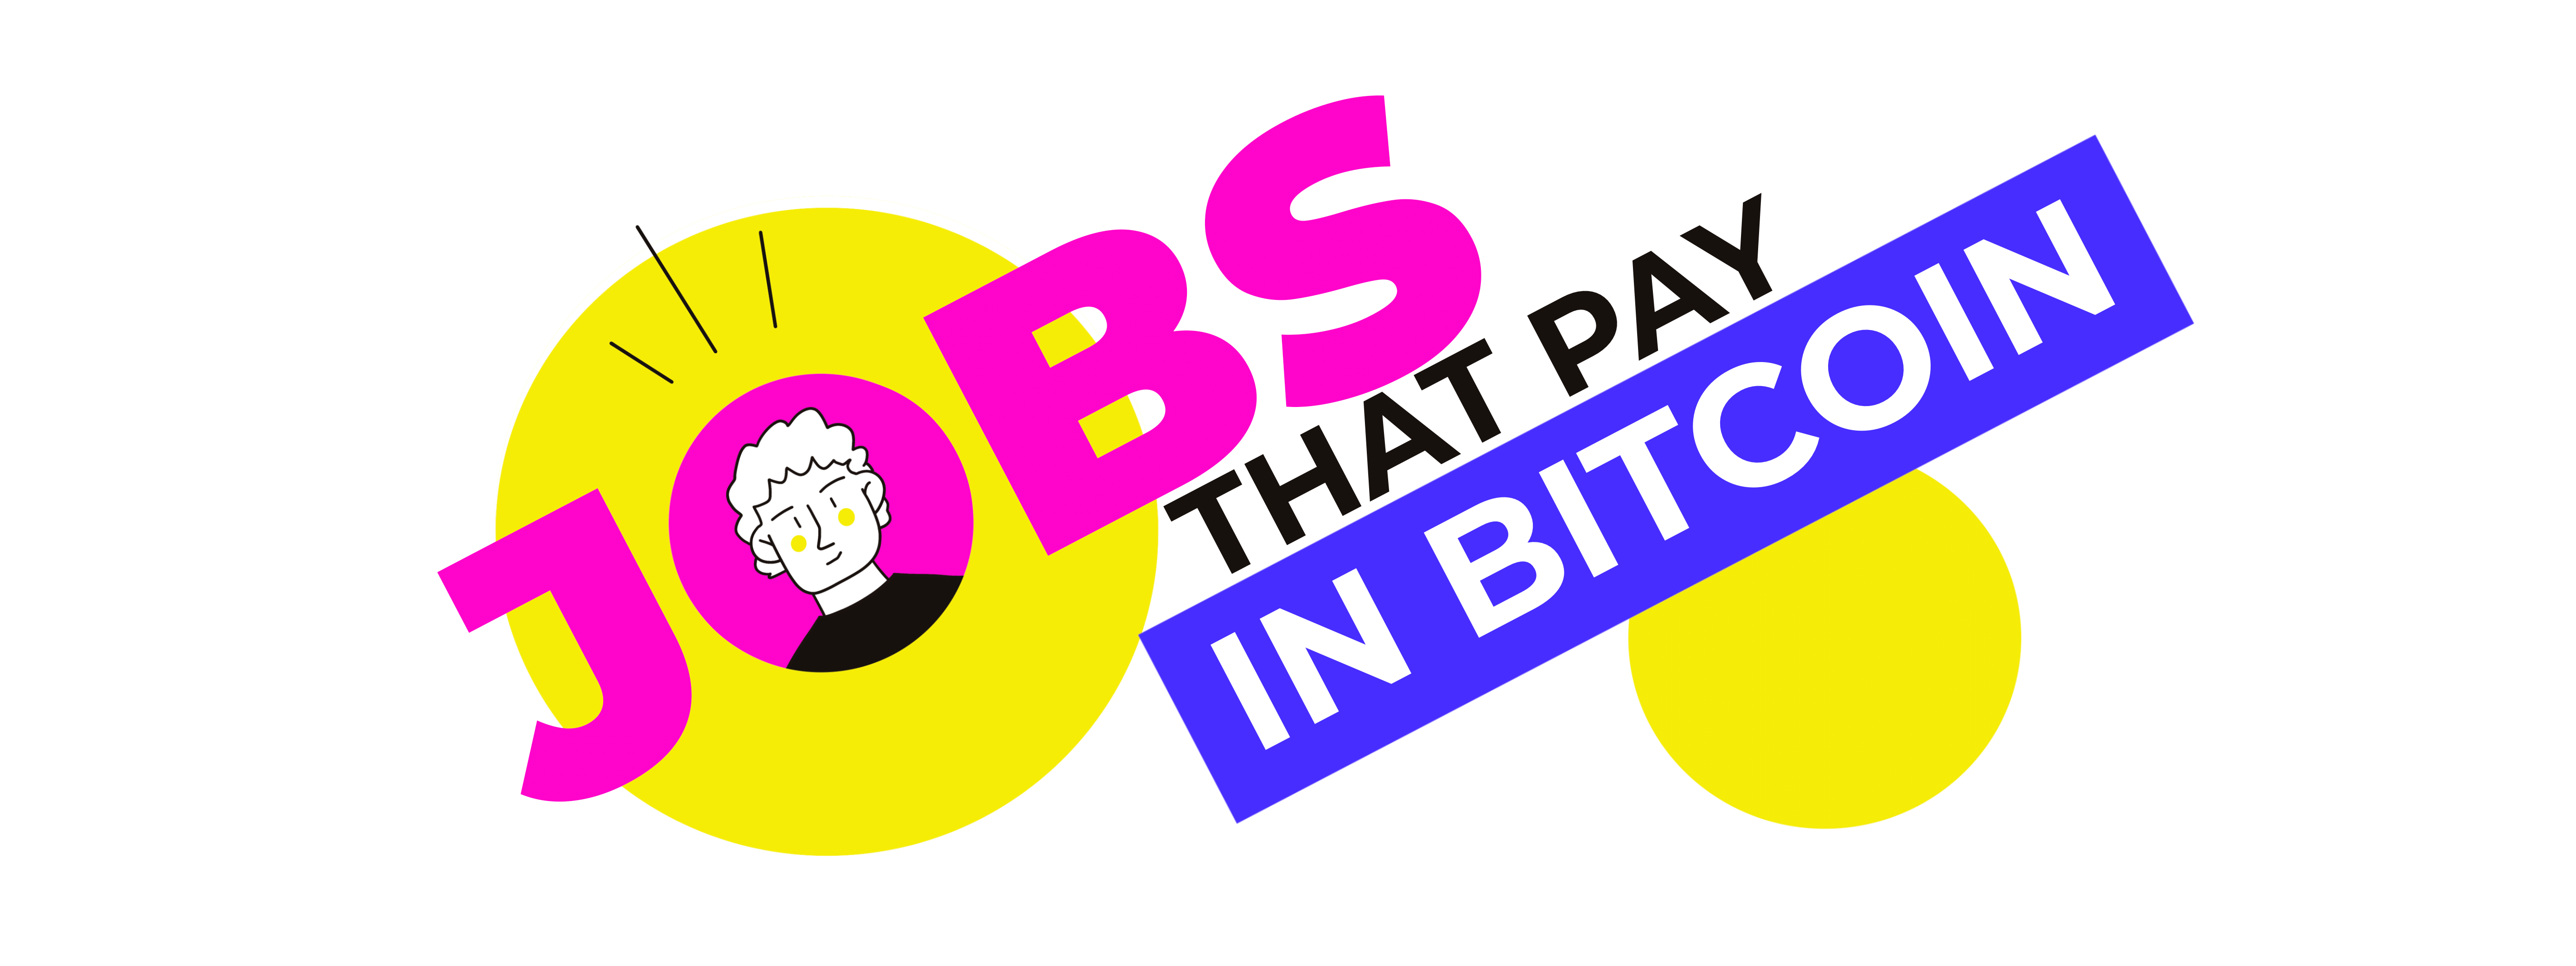 Jobs paid in bitcoin заработок на бирже криптовалют отзывы